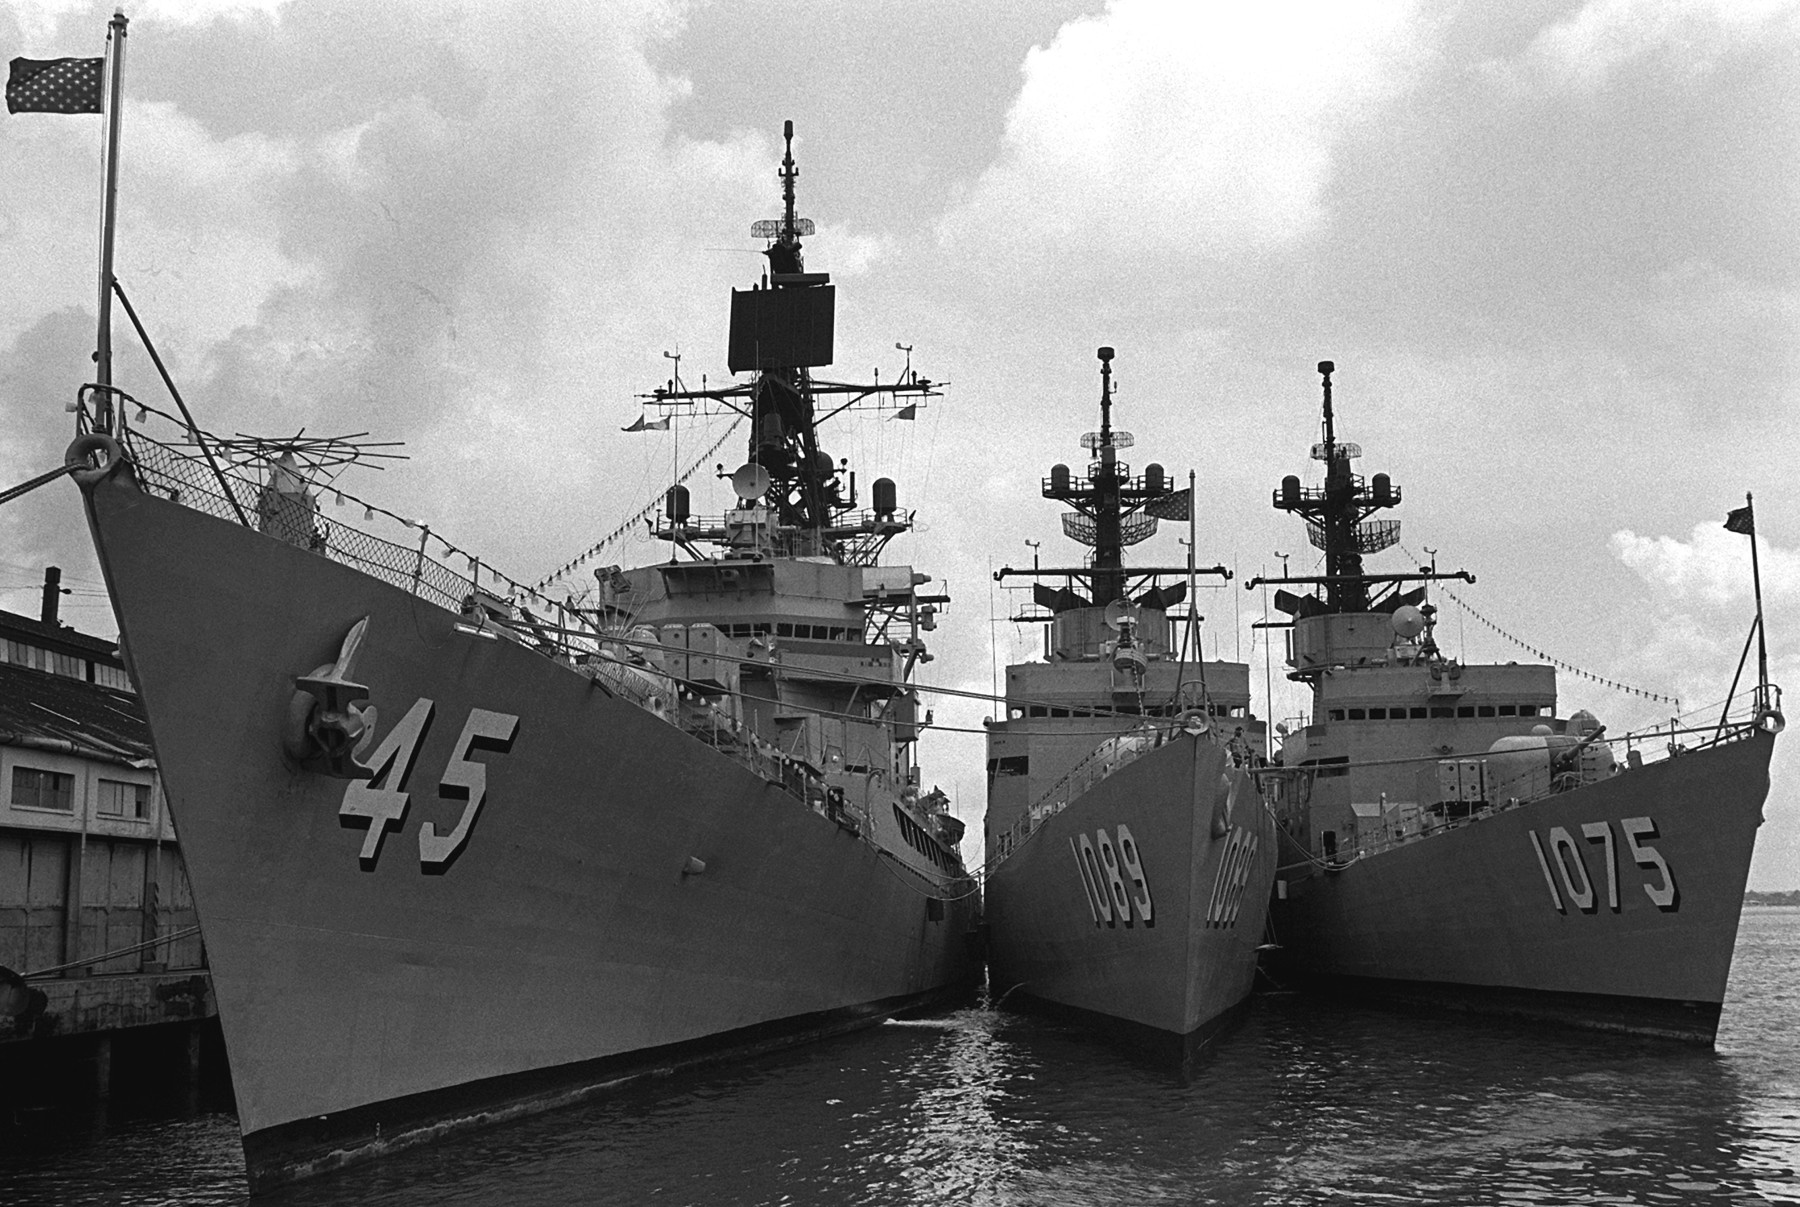 ddg-45 uss dewey farragut class destroyer us navy 1979 20